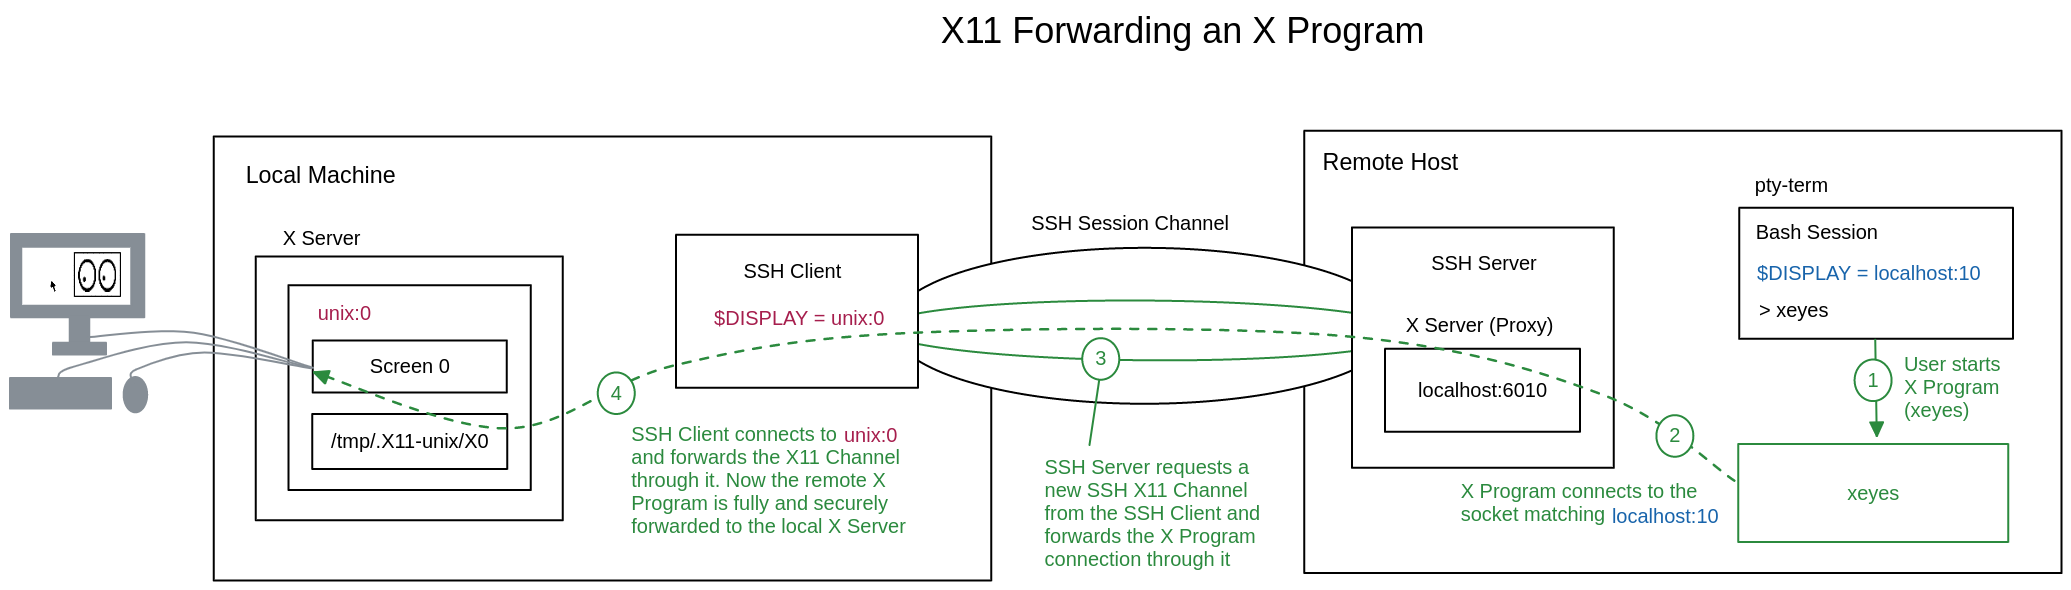 X11 Forwarding an X Program